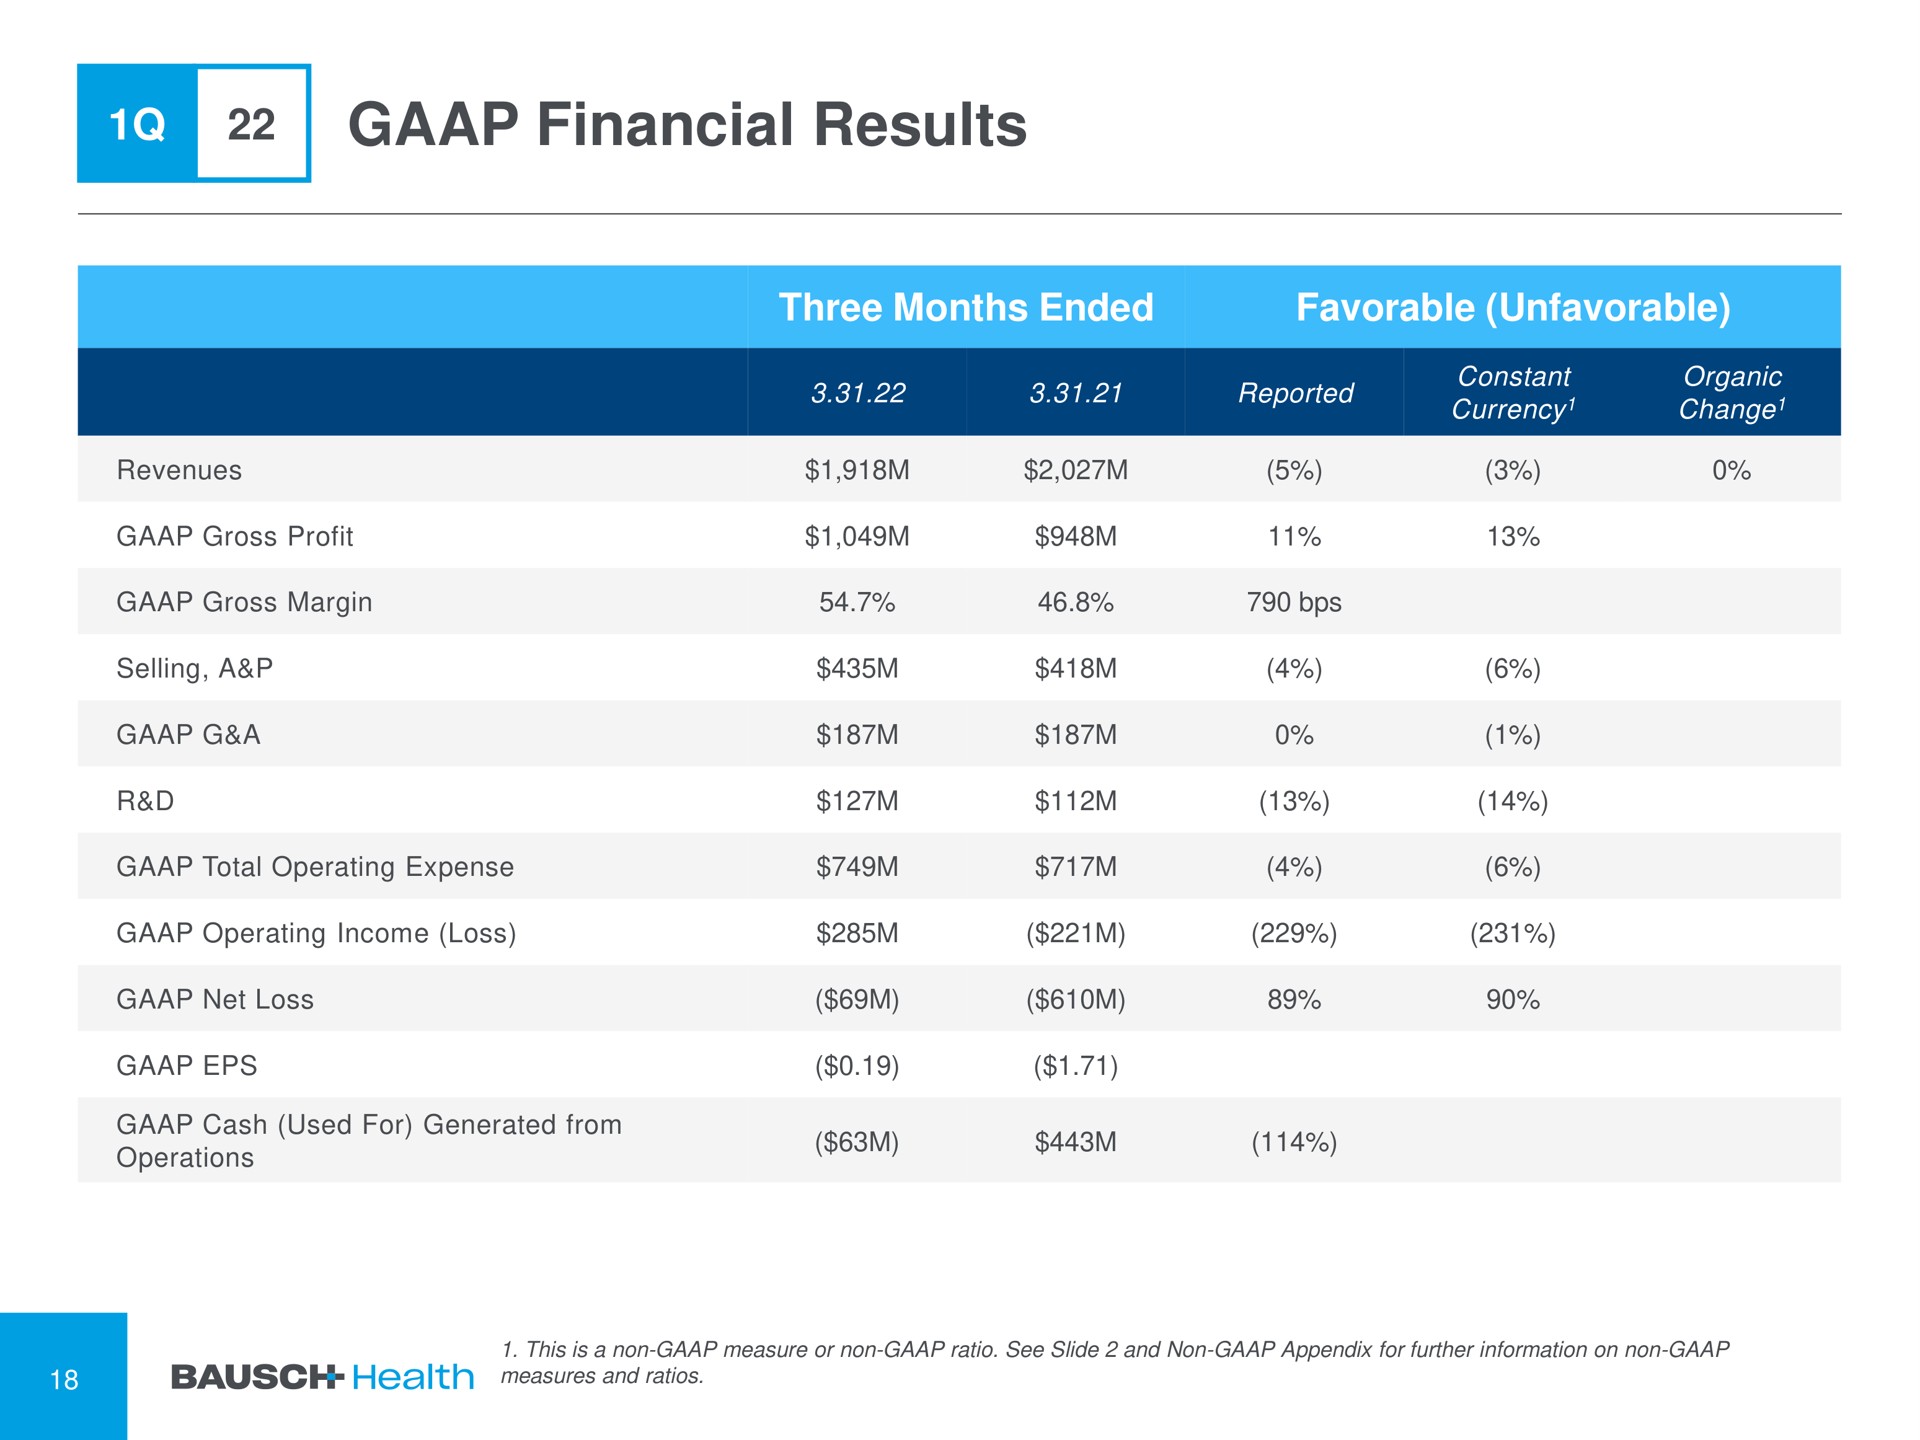 financial results | Bausch Health Companies